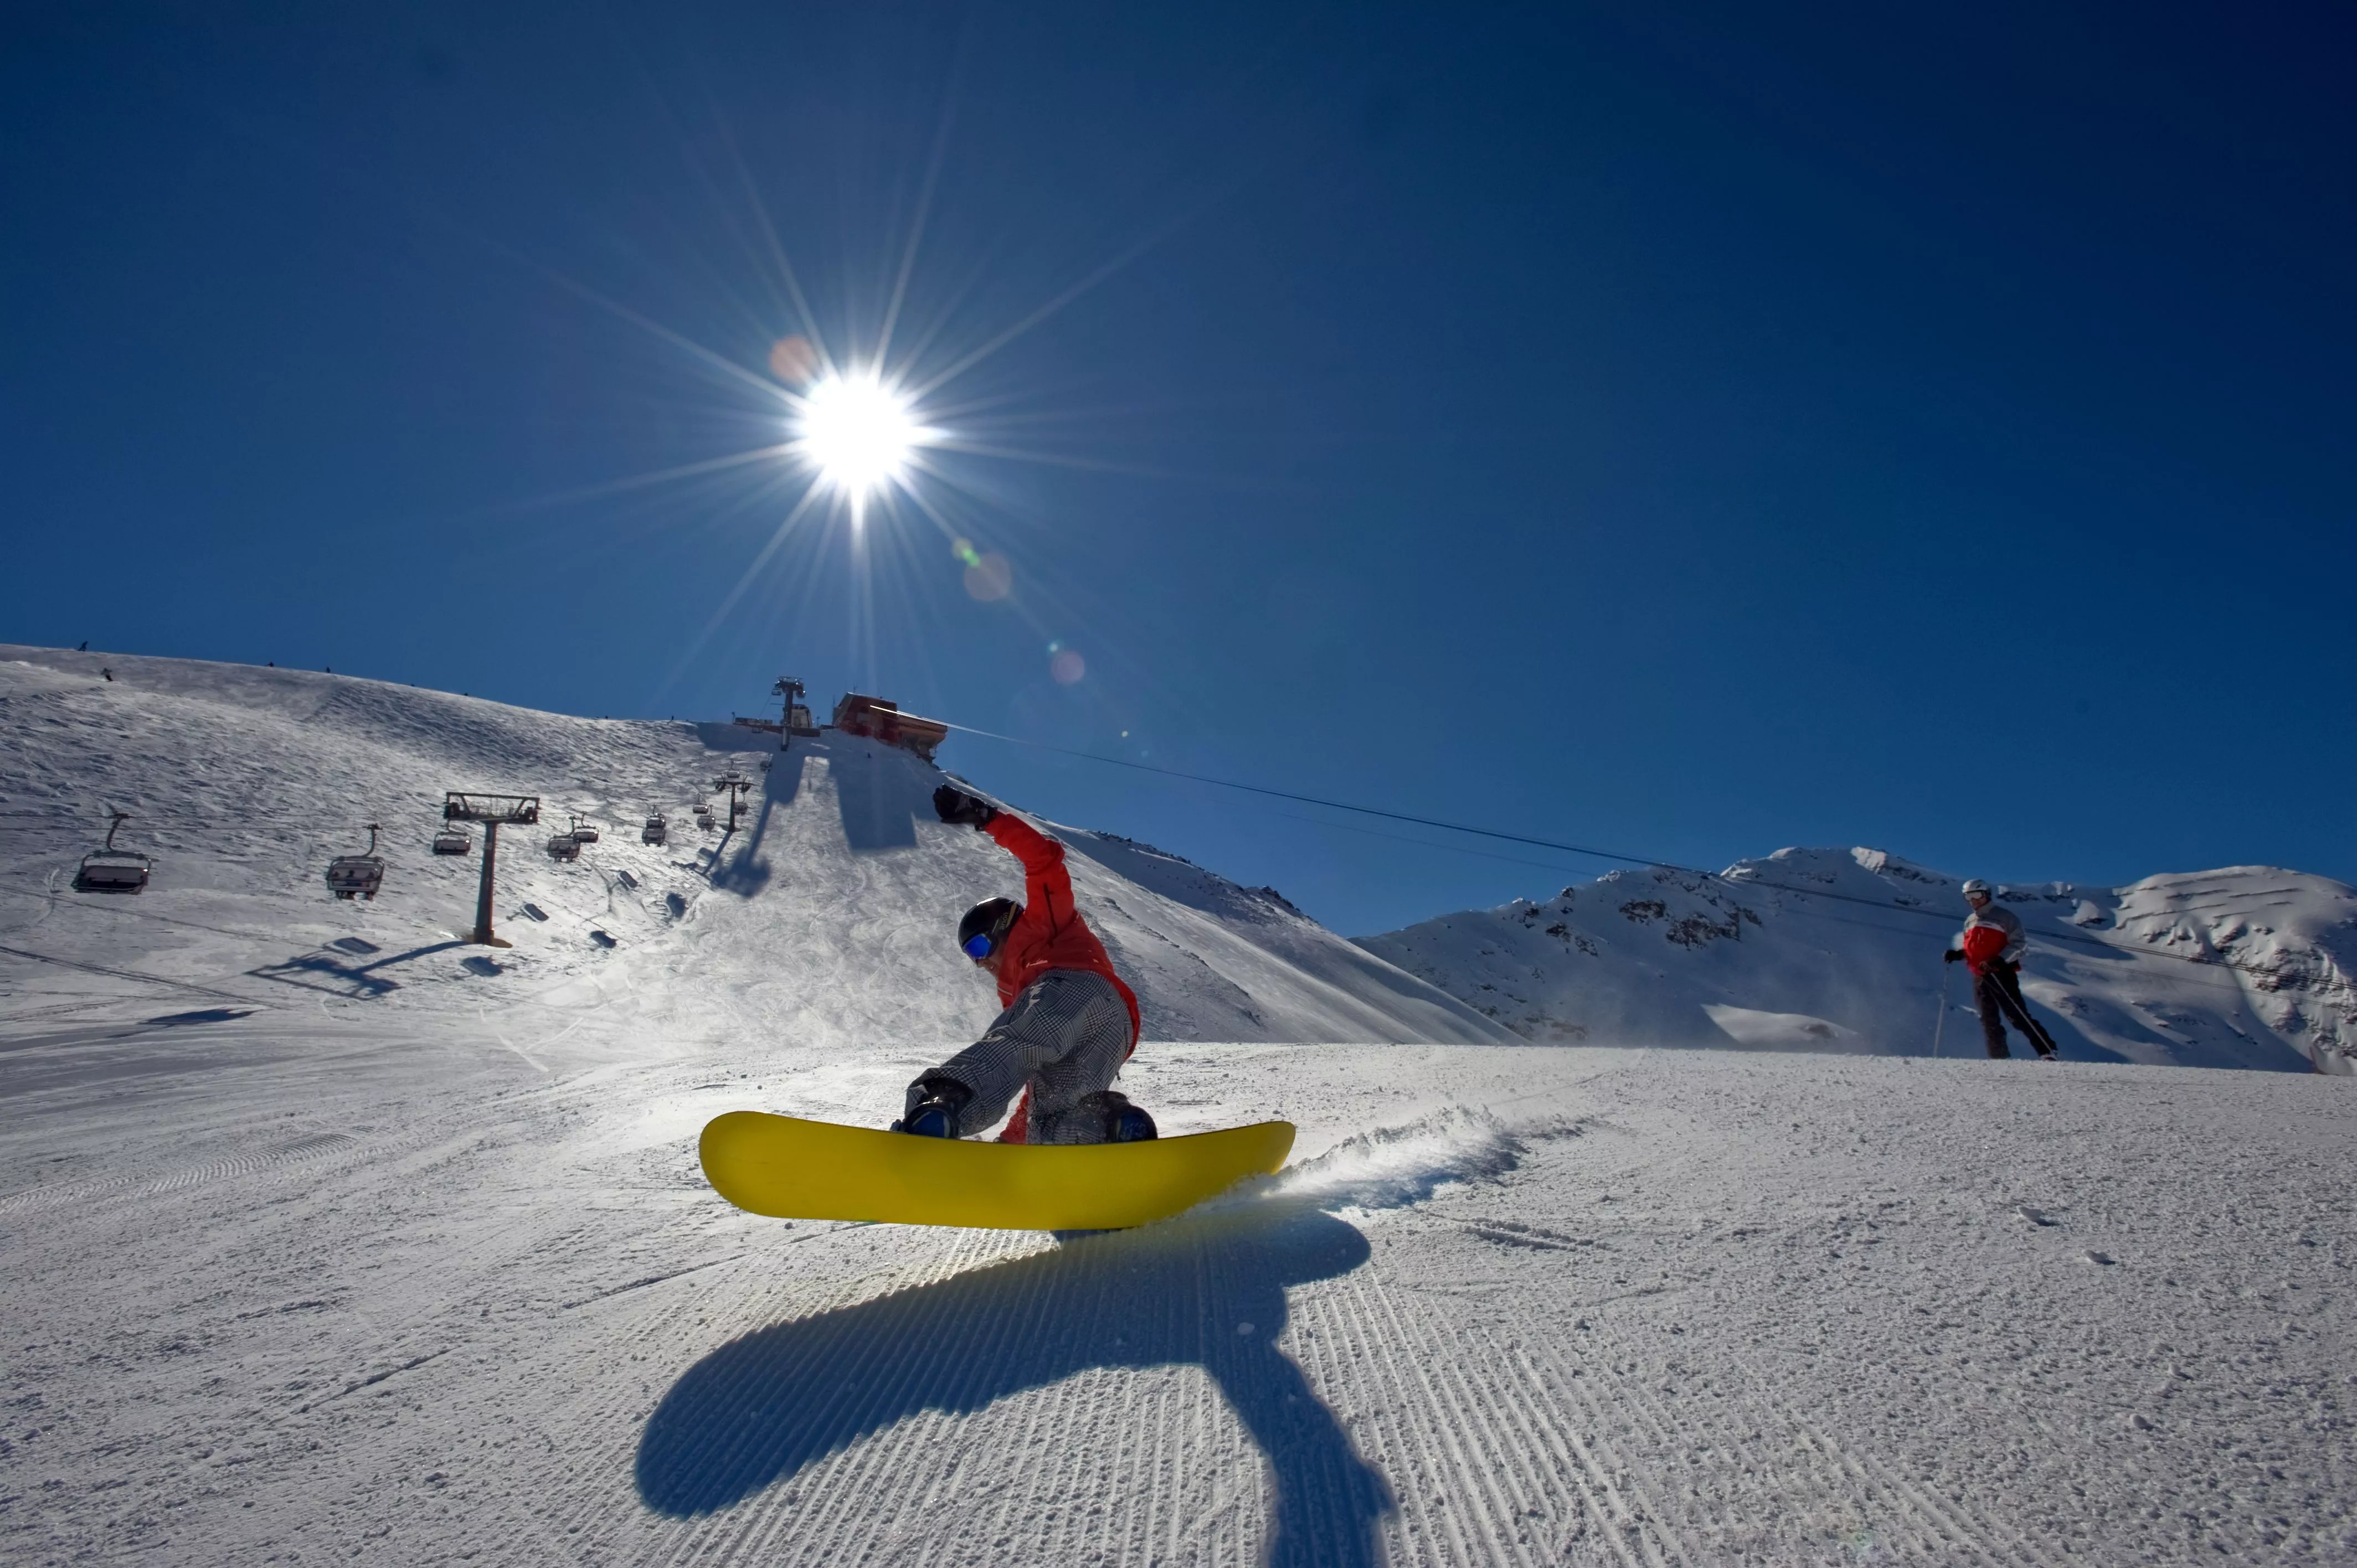 Bormio Ski & Bike - Ski Rental in Italy, Europe | Snowboarding,Skiing,Mountain Biking - Rated 1